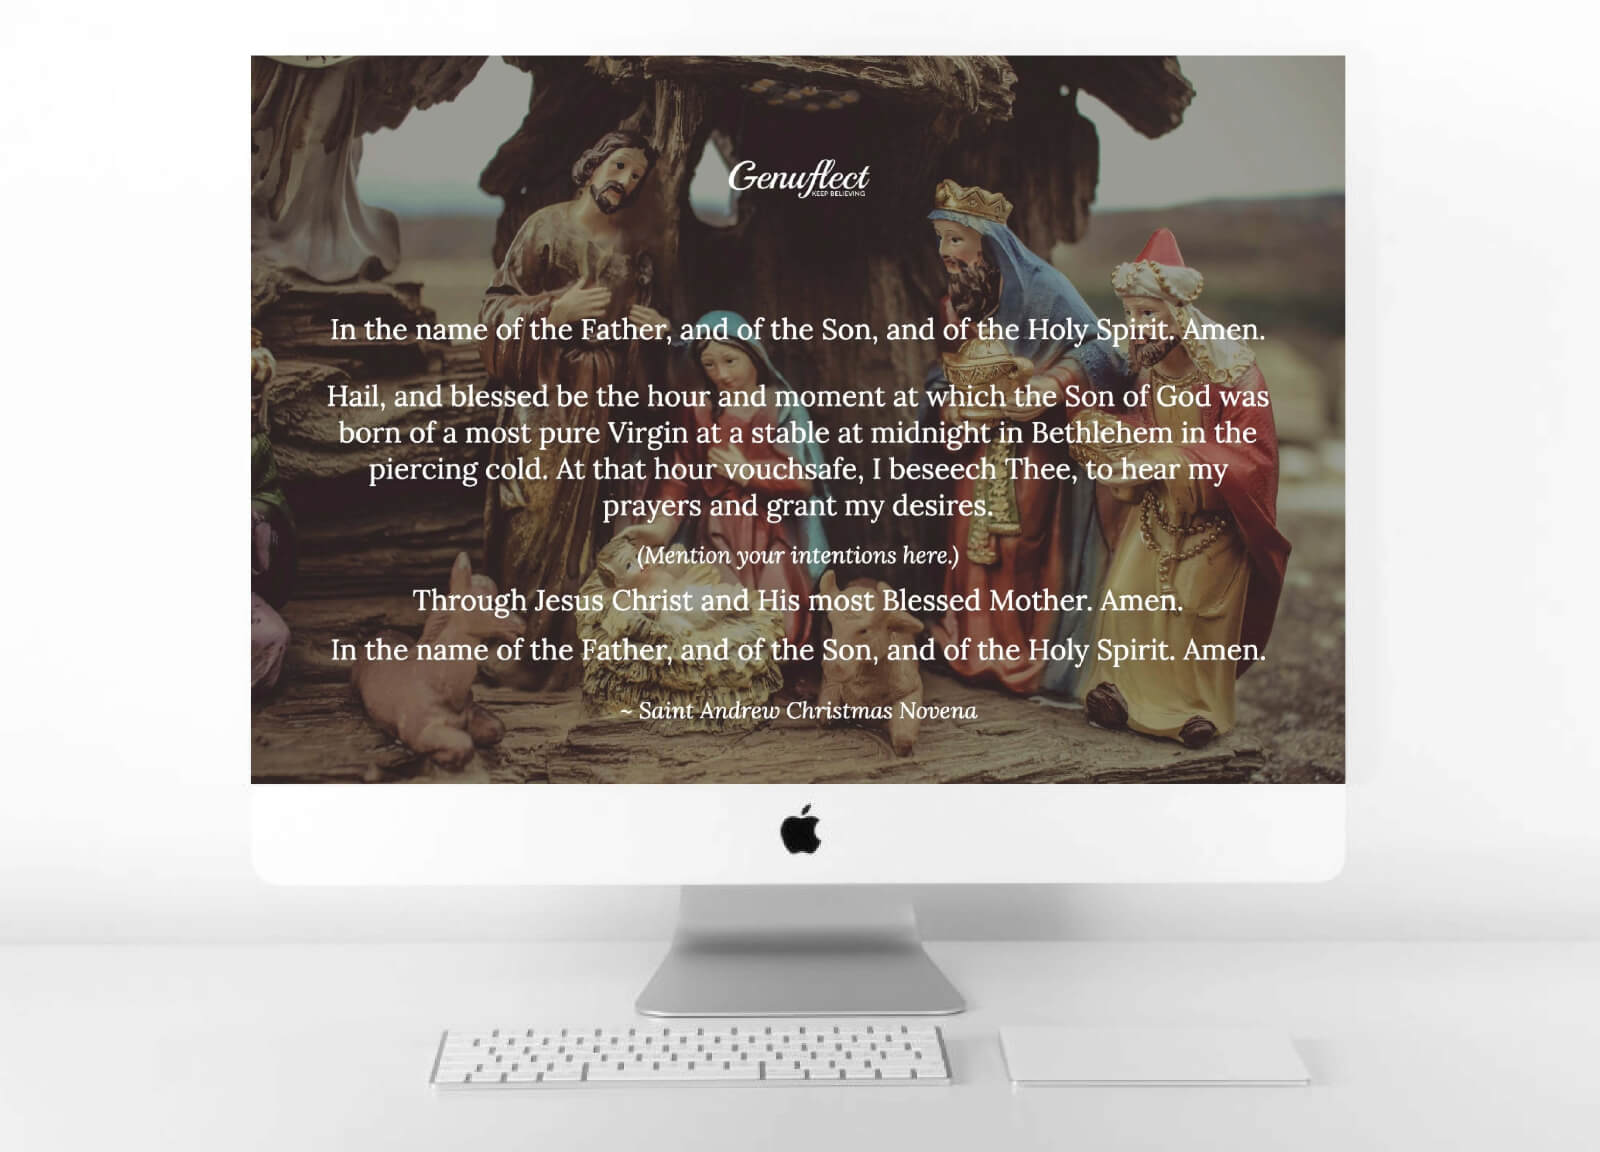 Genufleck computer ackground image of a Nativity scene